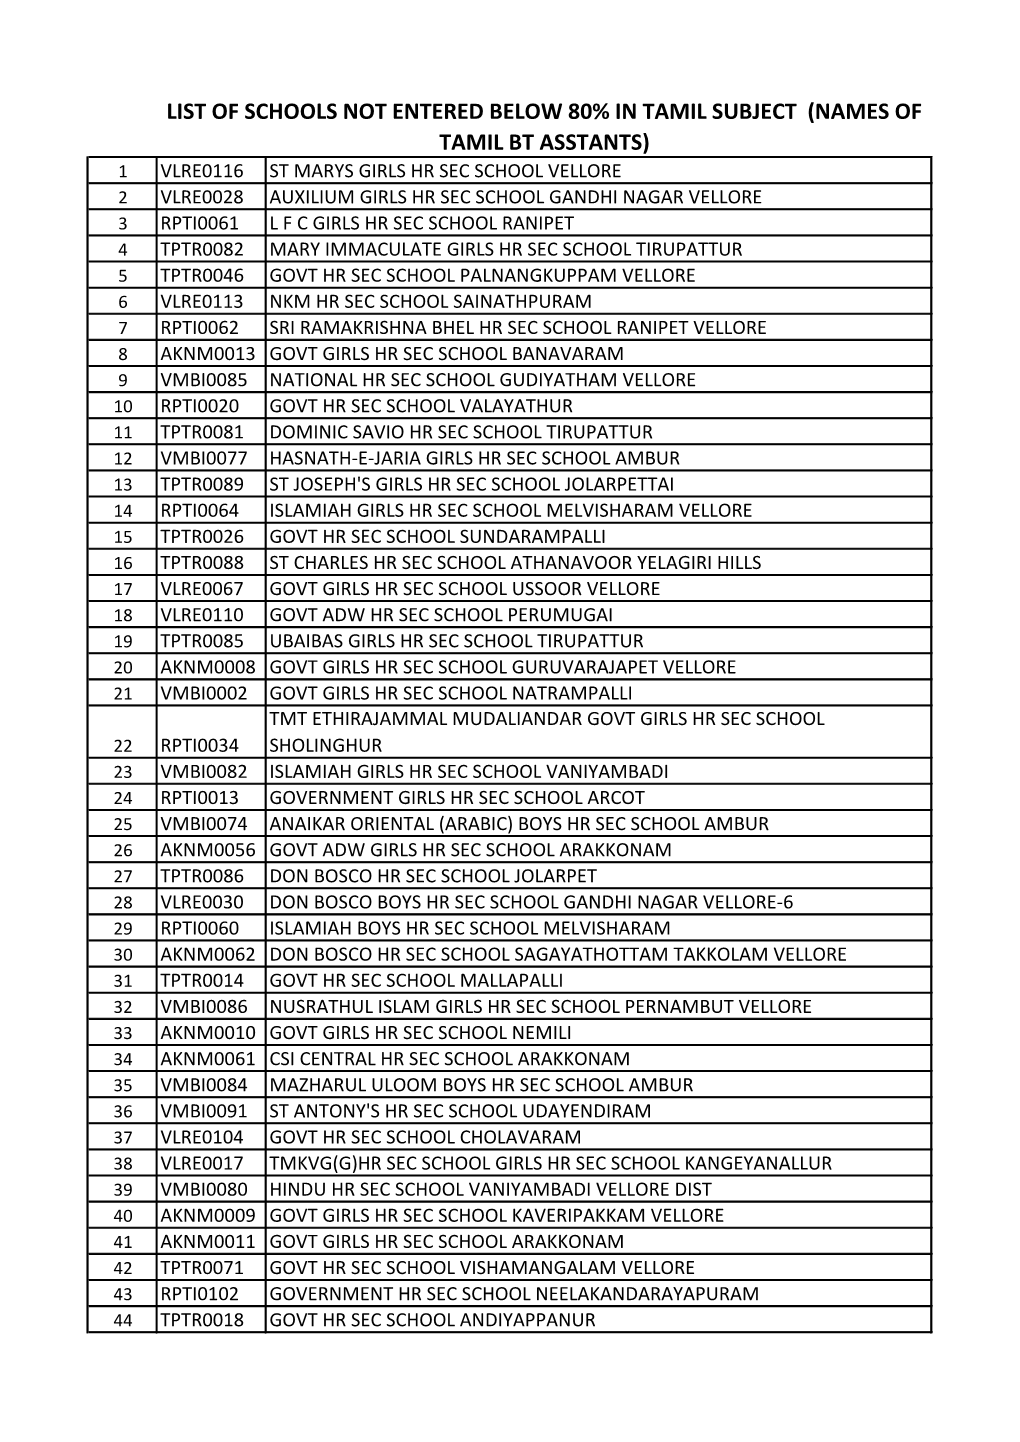 List of Schools Not Entered Below 80% in Tamil Subject (Names of Tamil Bt Asstants)